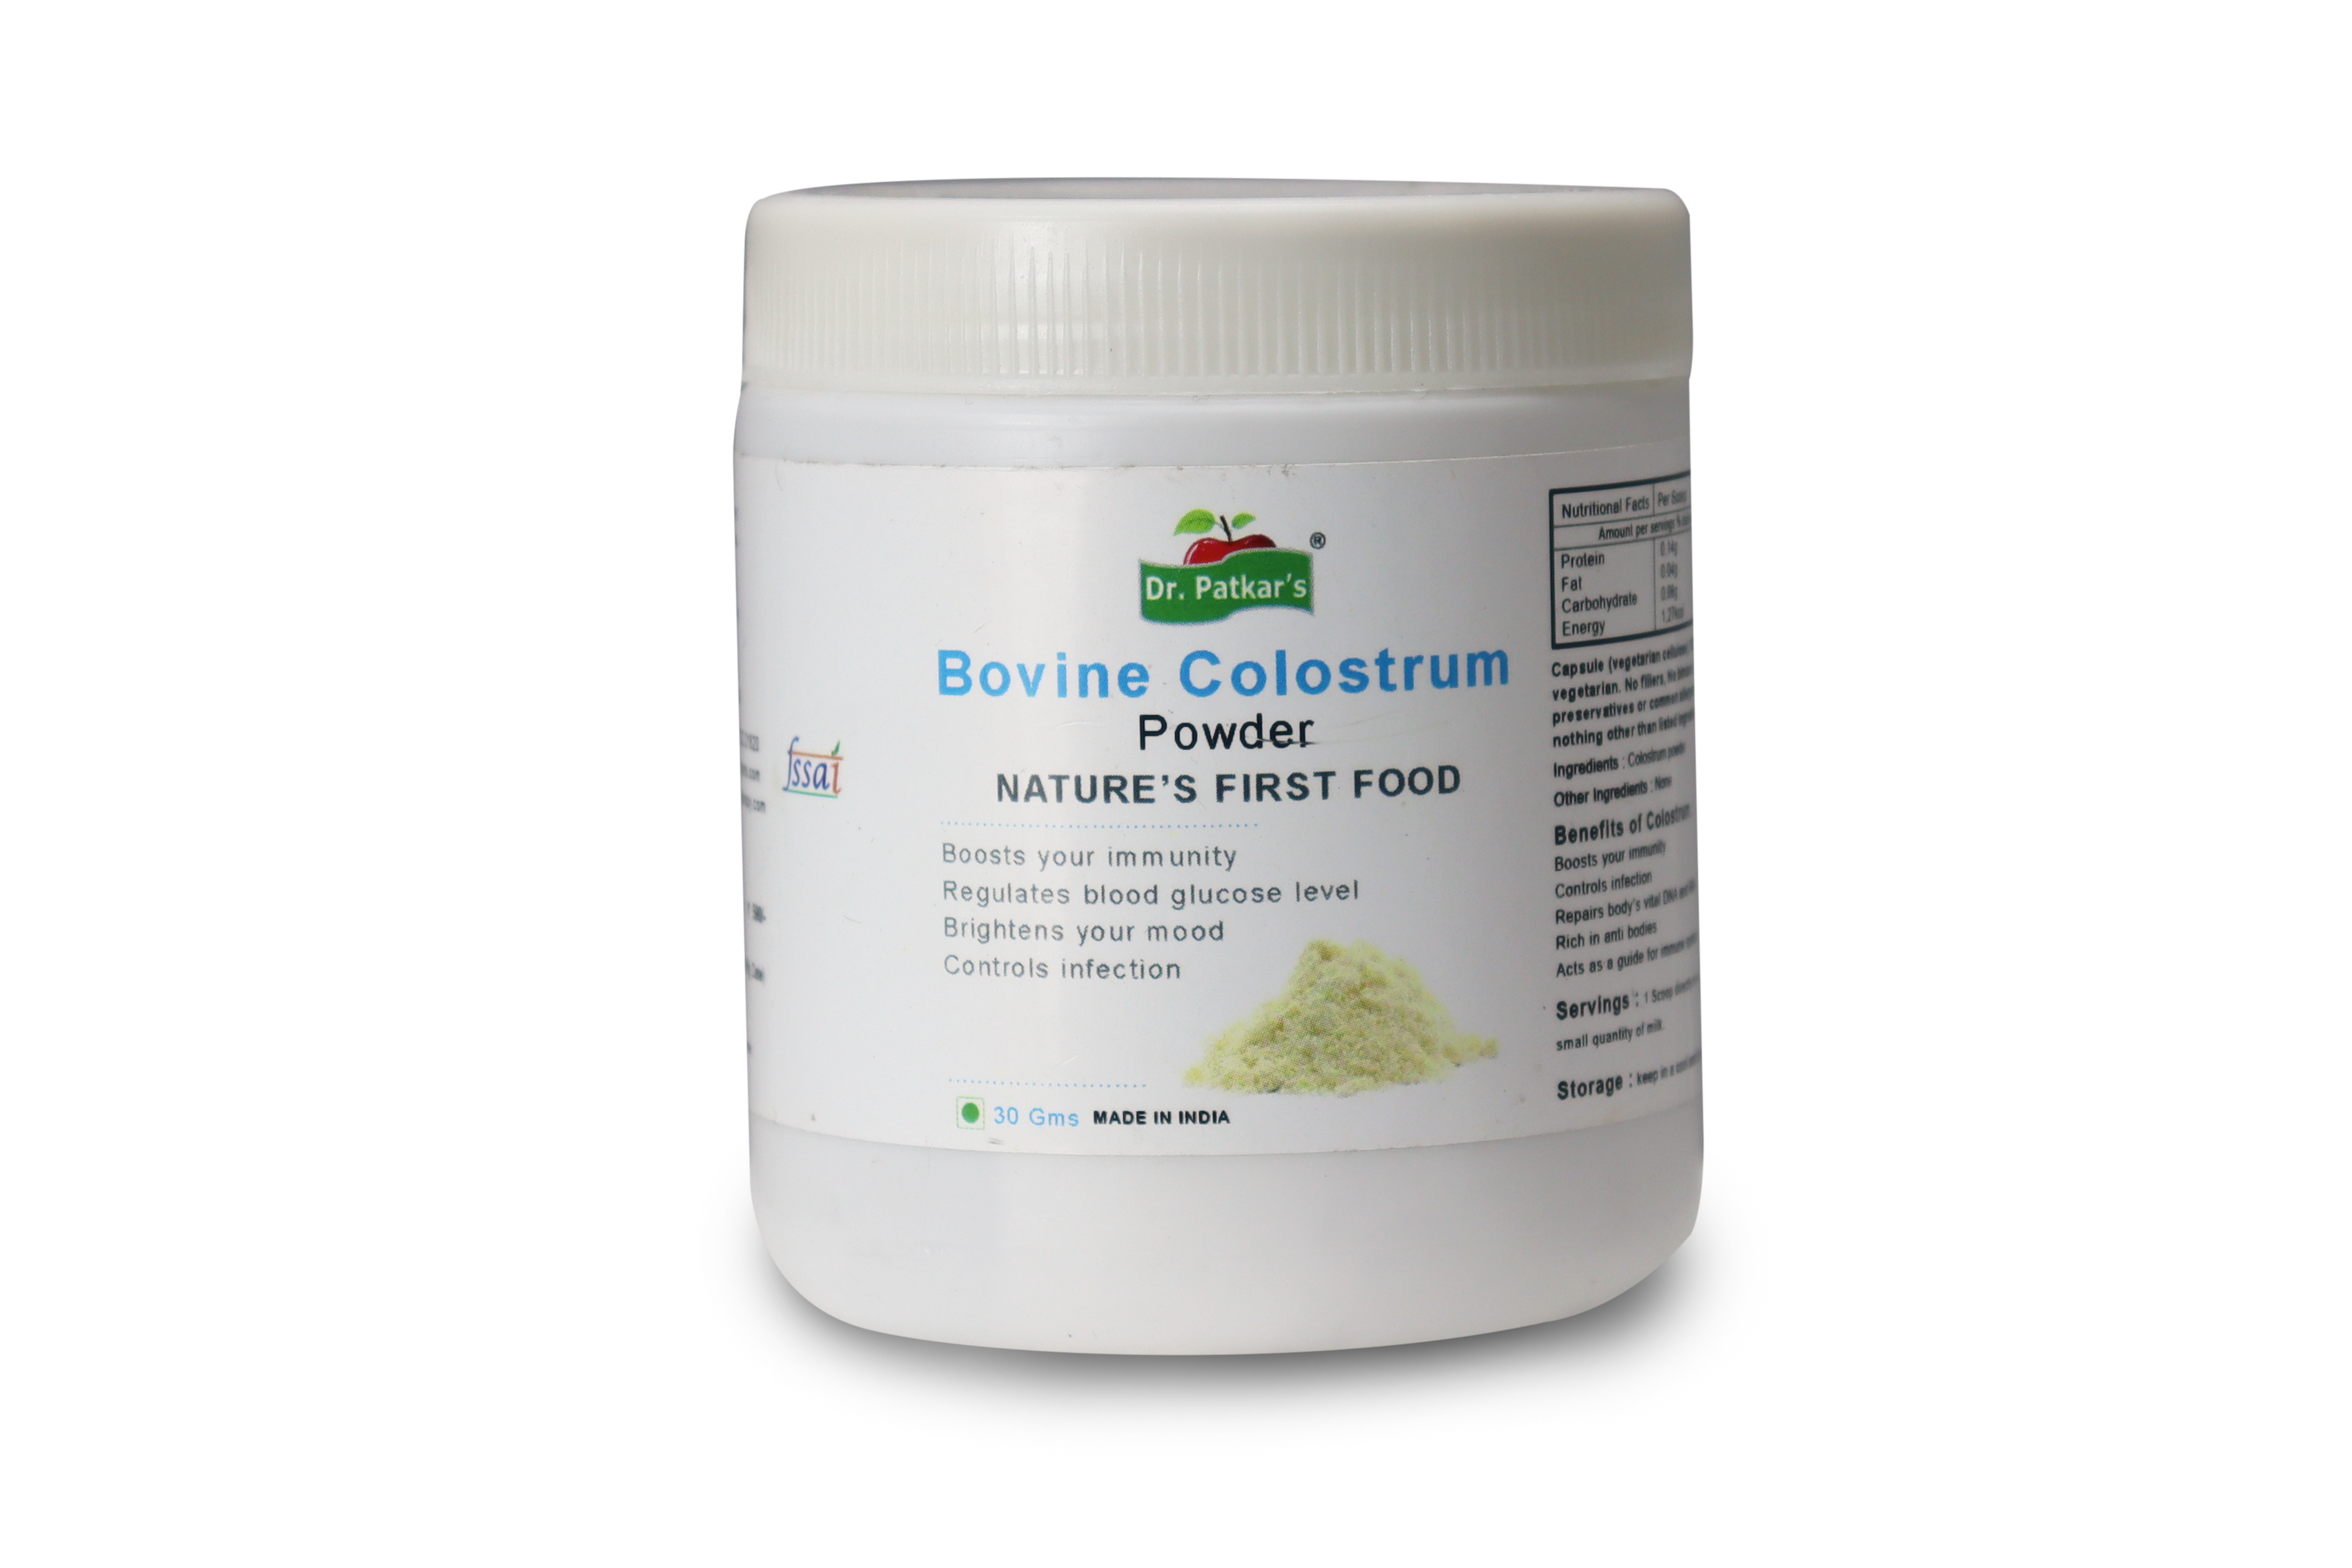 Dr. Patkar's Bovine Colostrum Powder